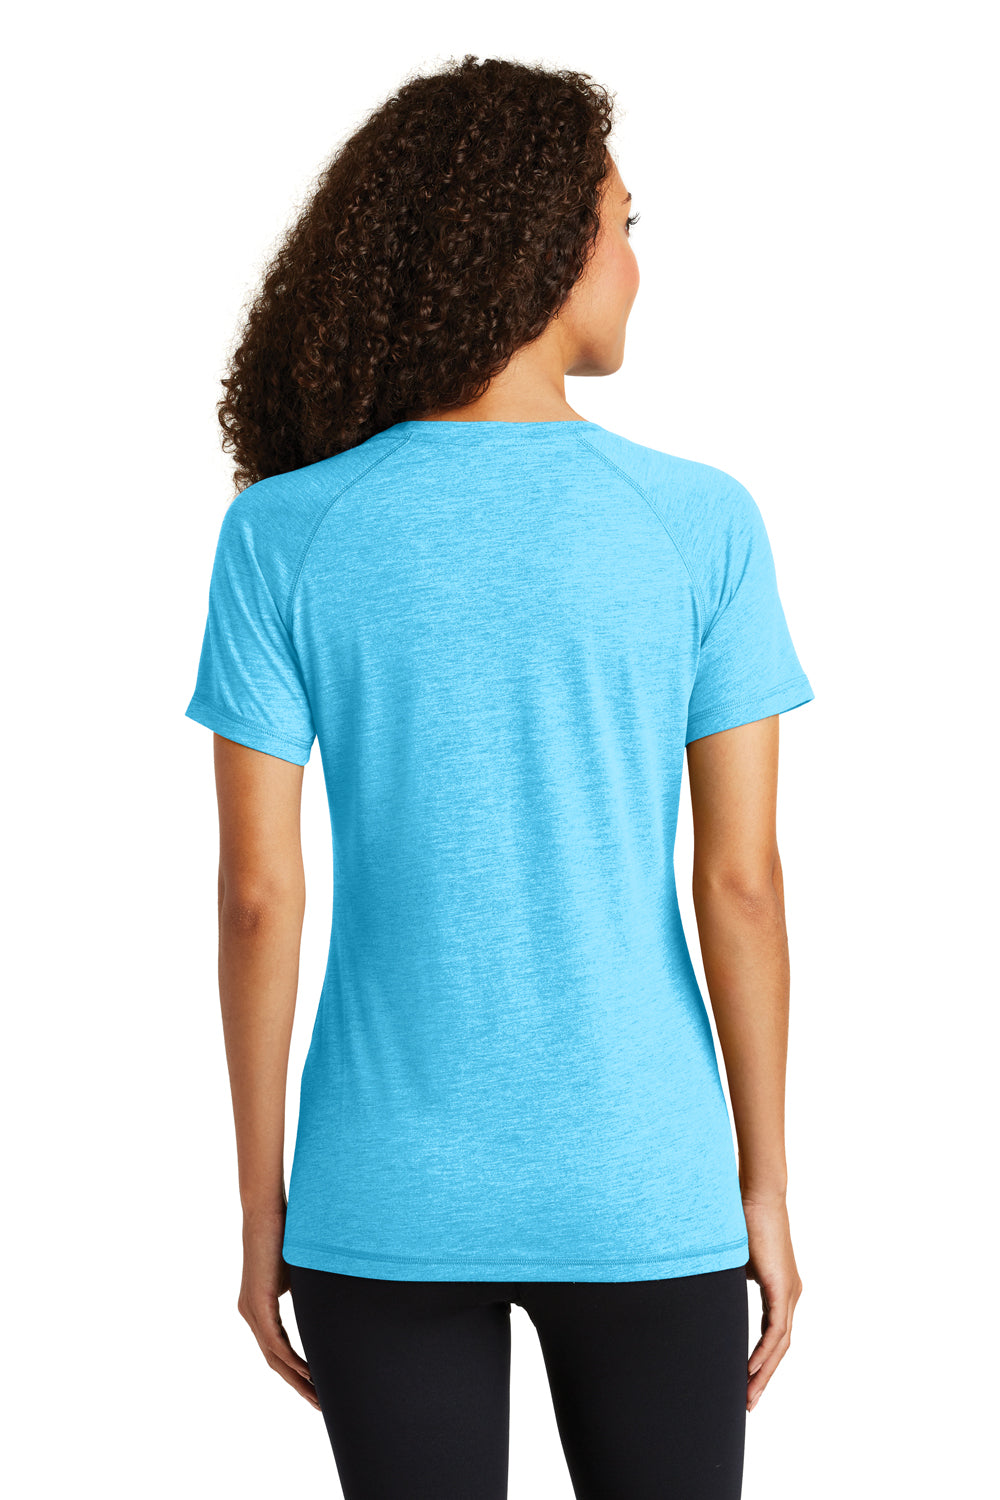 Sport-Tek LST400 Womens Moisture Wicking Short Sleeve Scoop Neck T-Shirt Heather Pond Blue Back